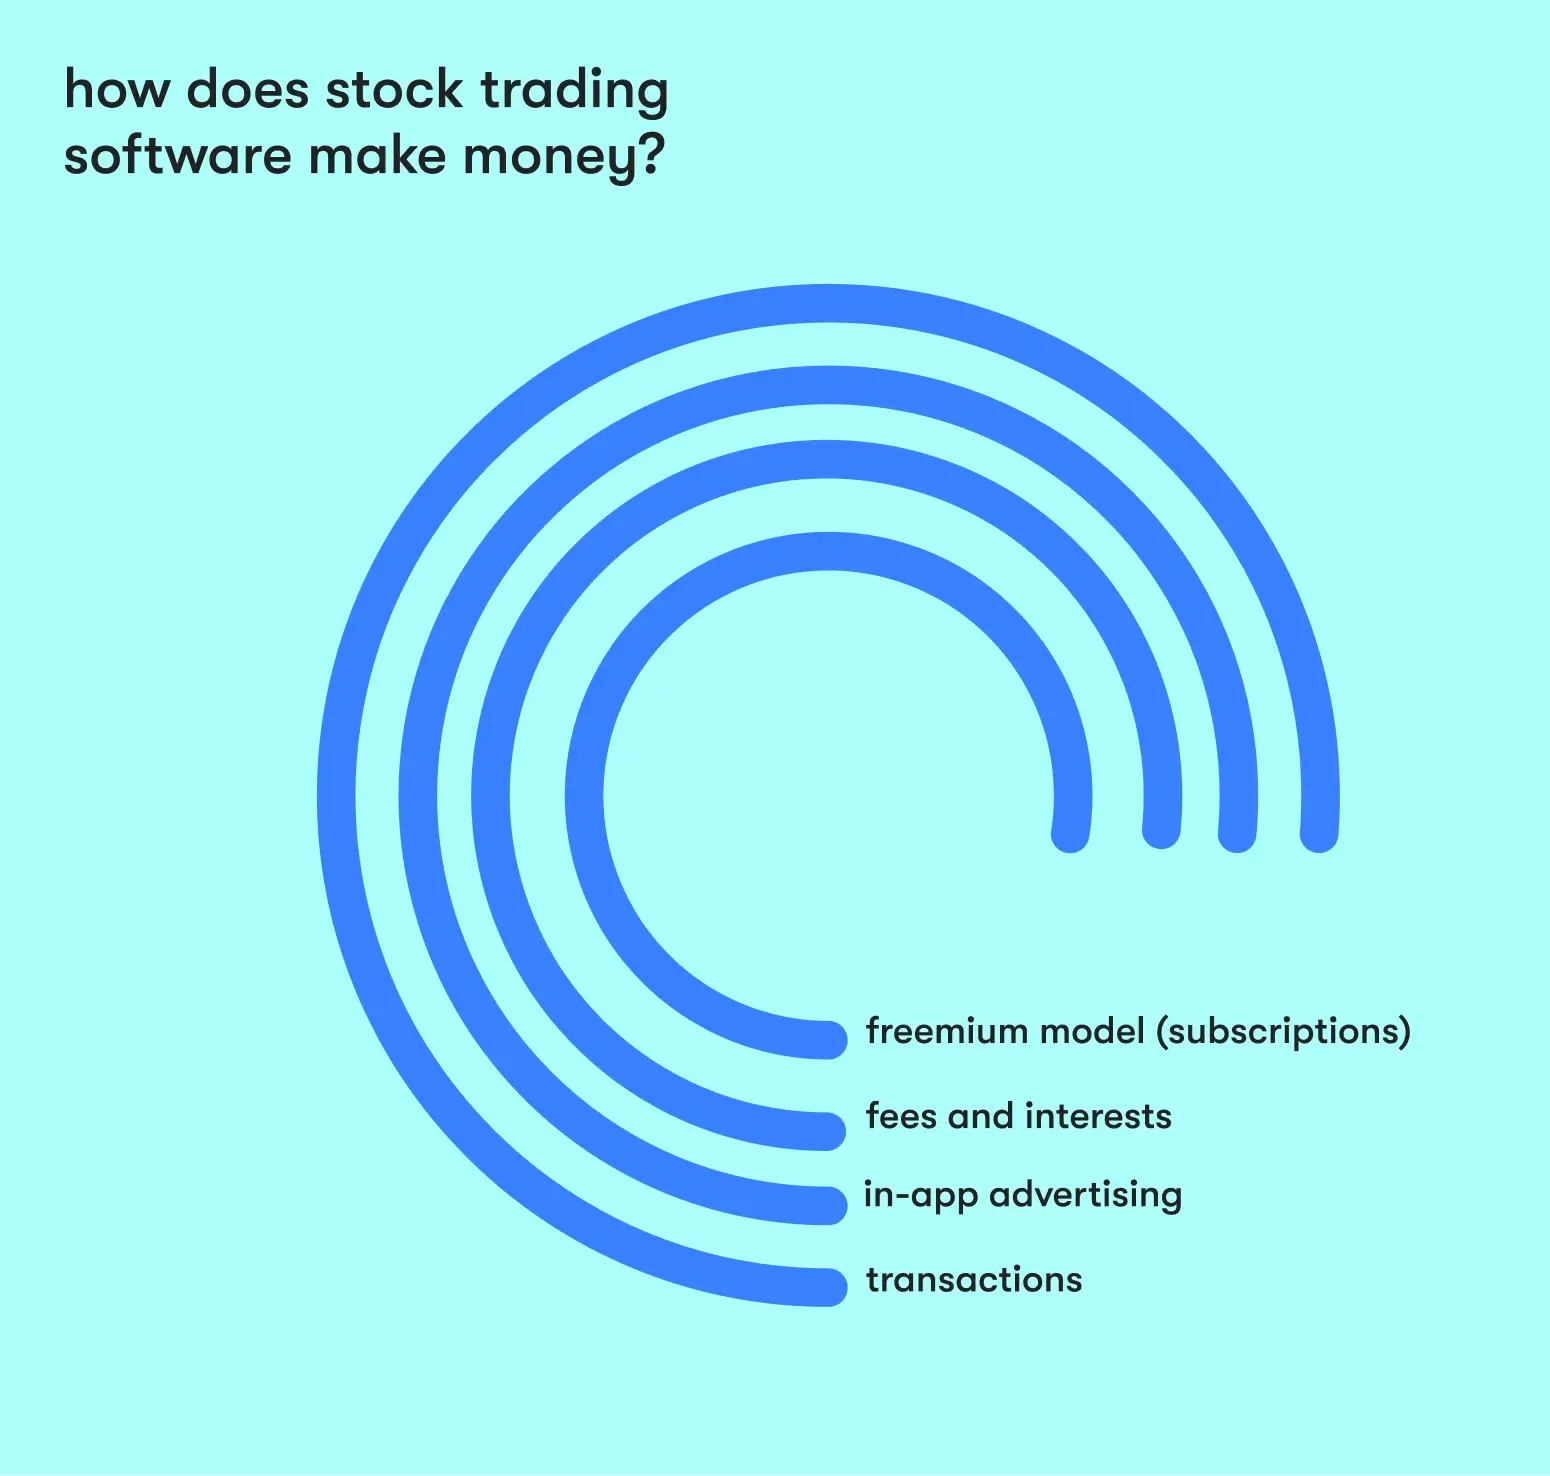 stock trading software monetization models